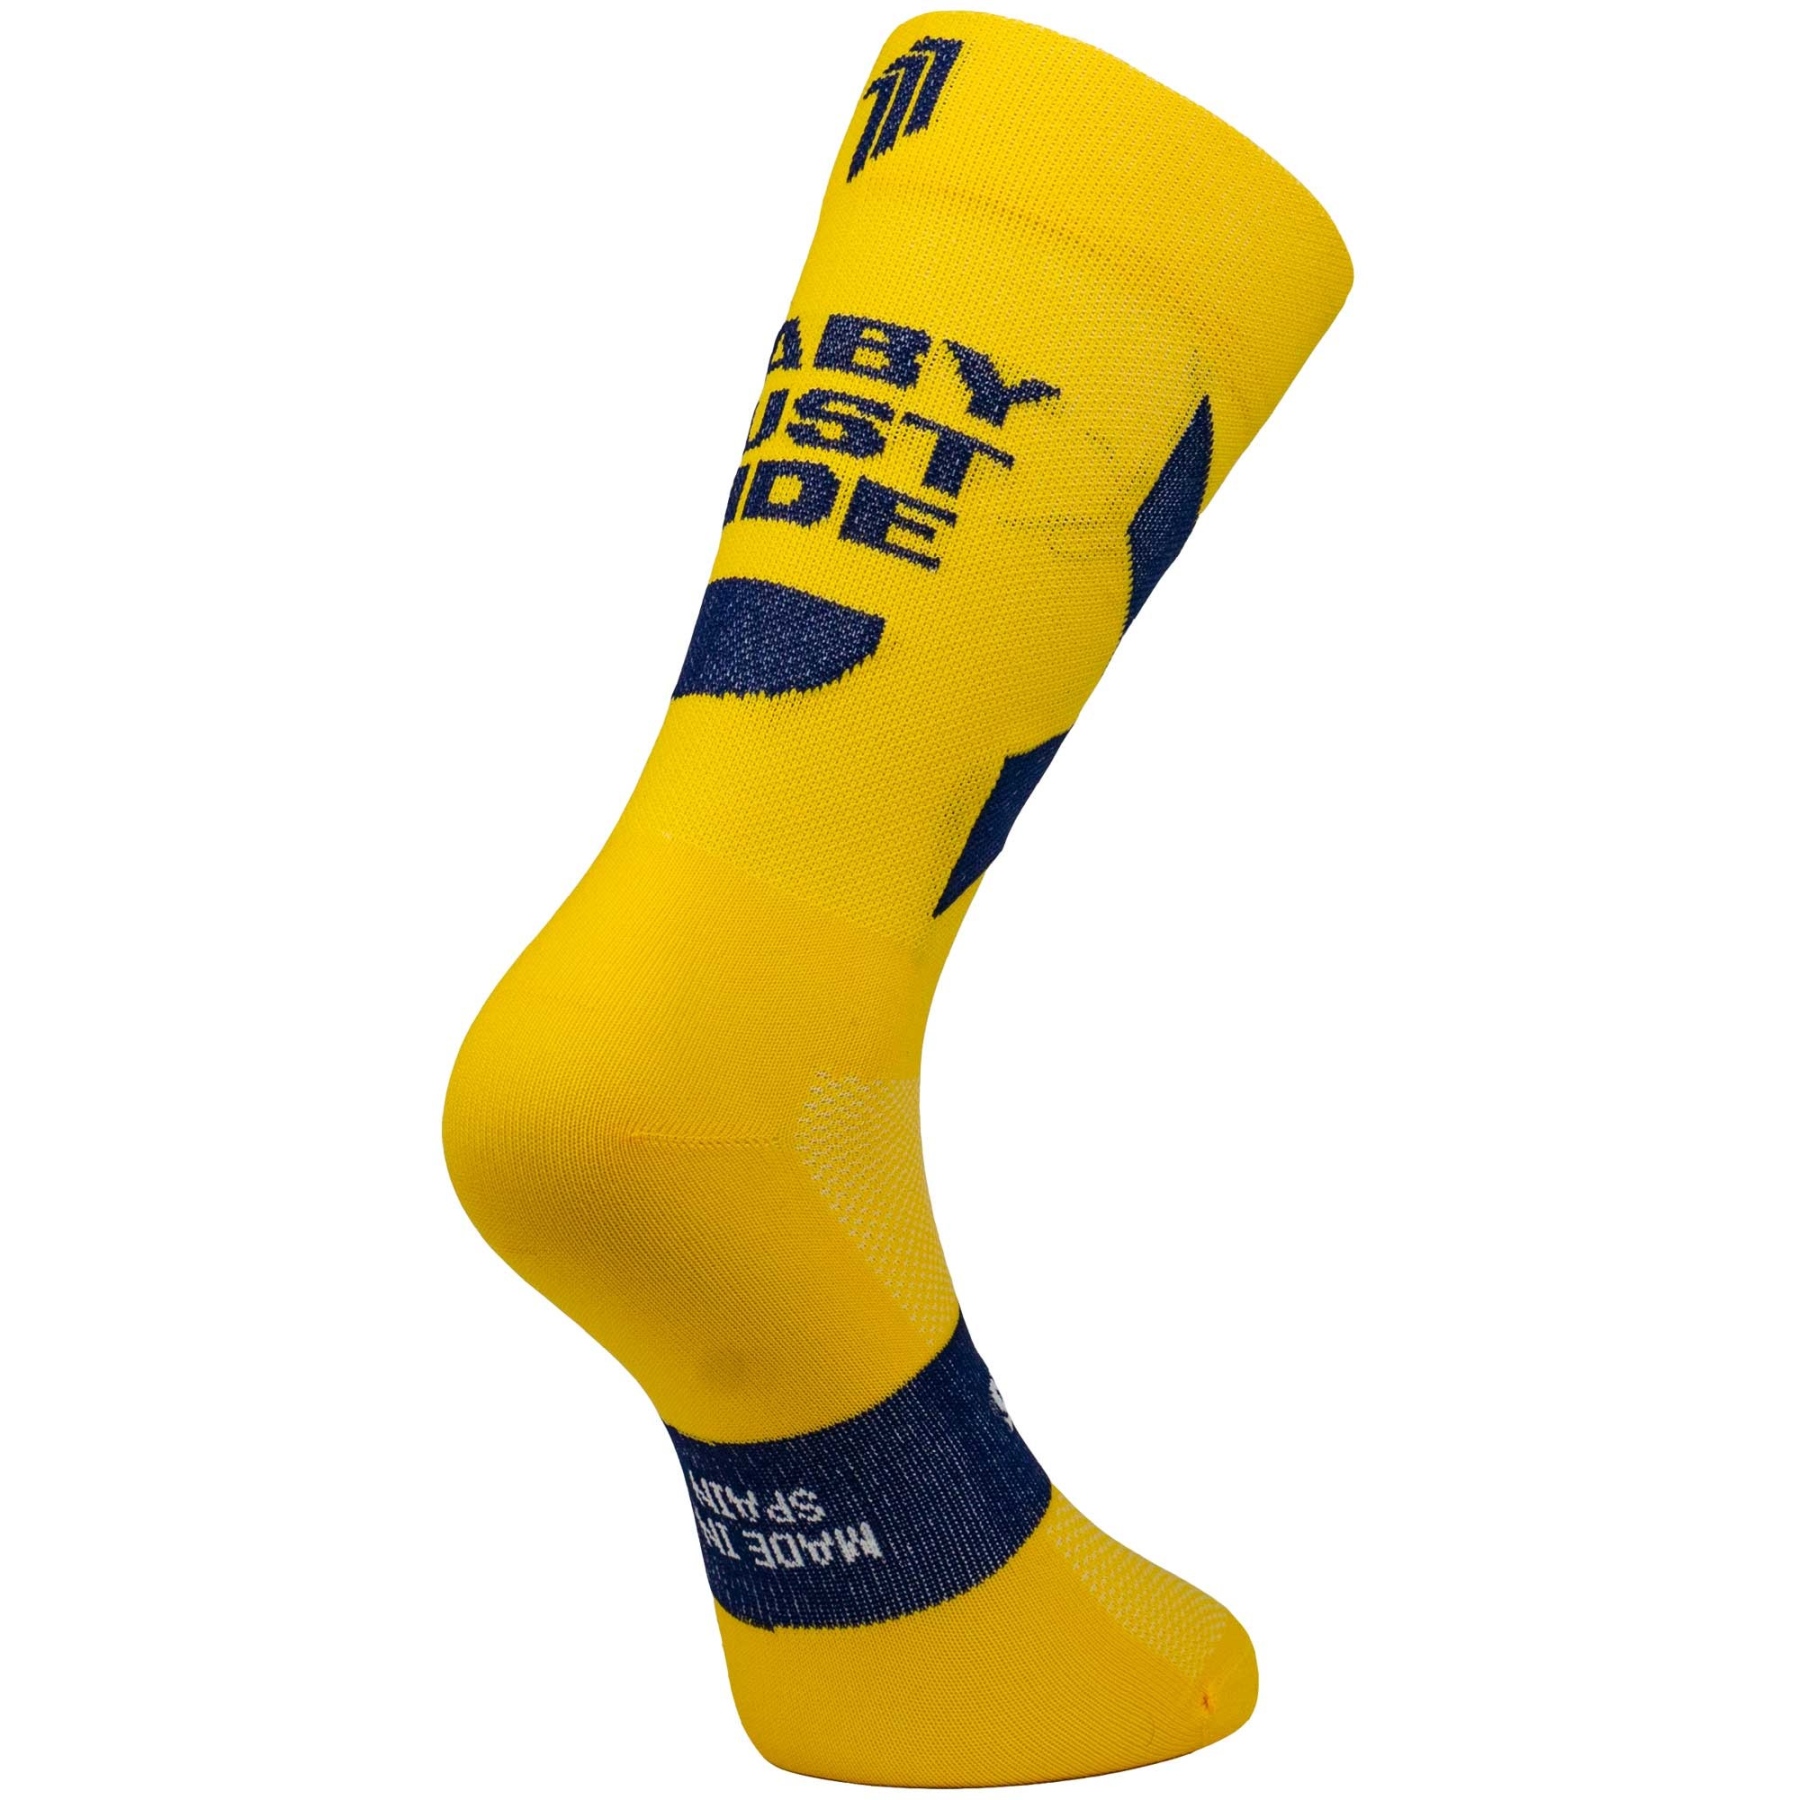 Productfoto van SPORCKS Cycling Socks - Baby JR Yellow